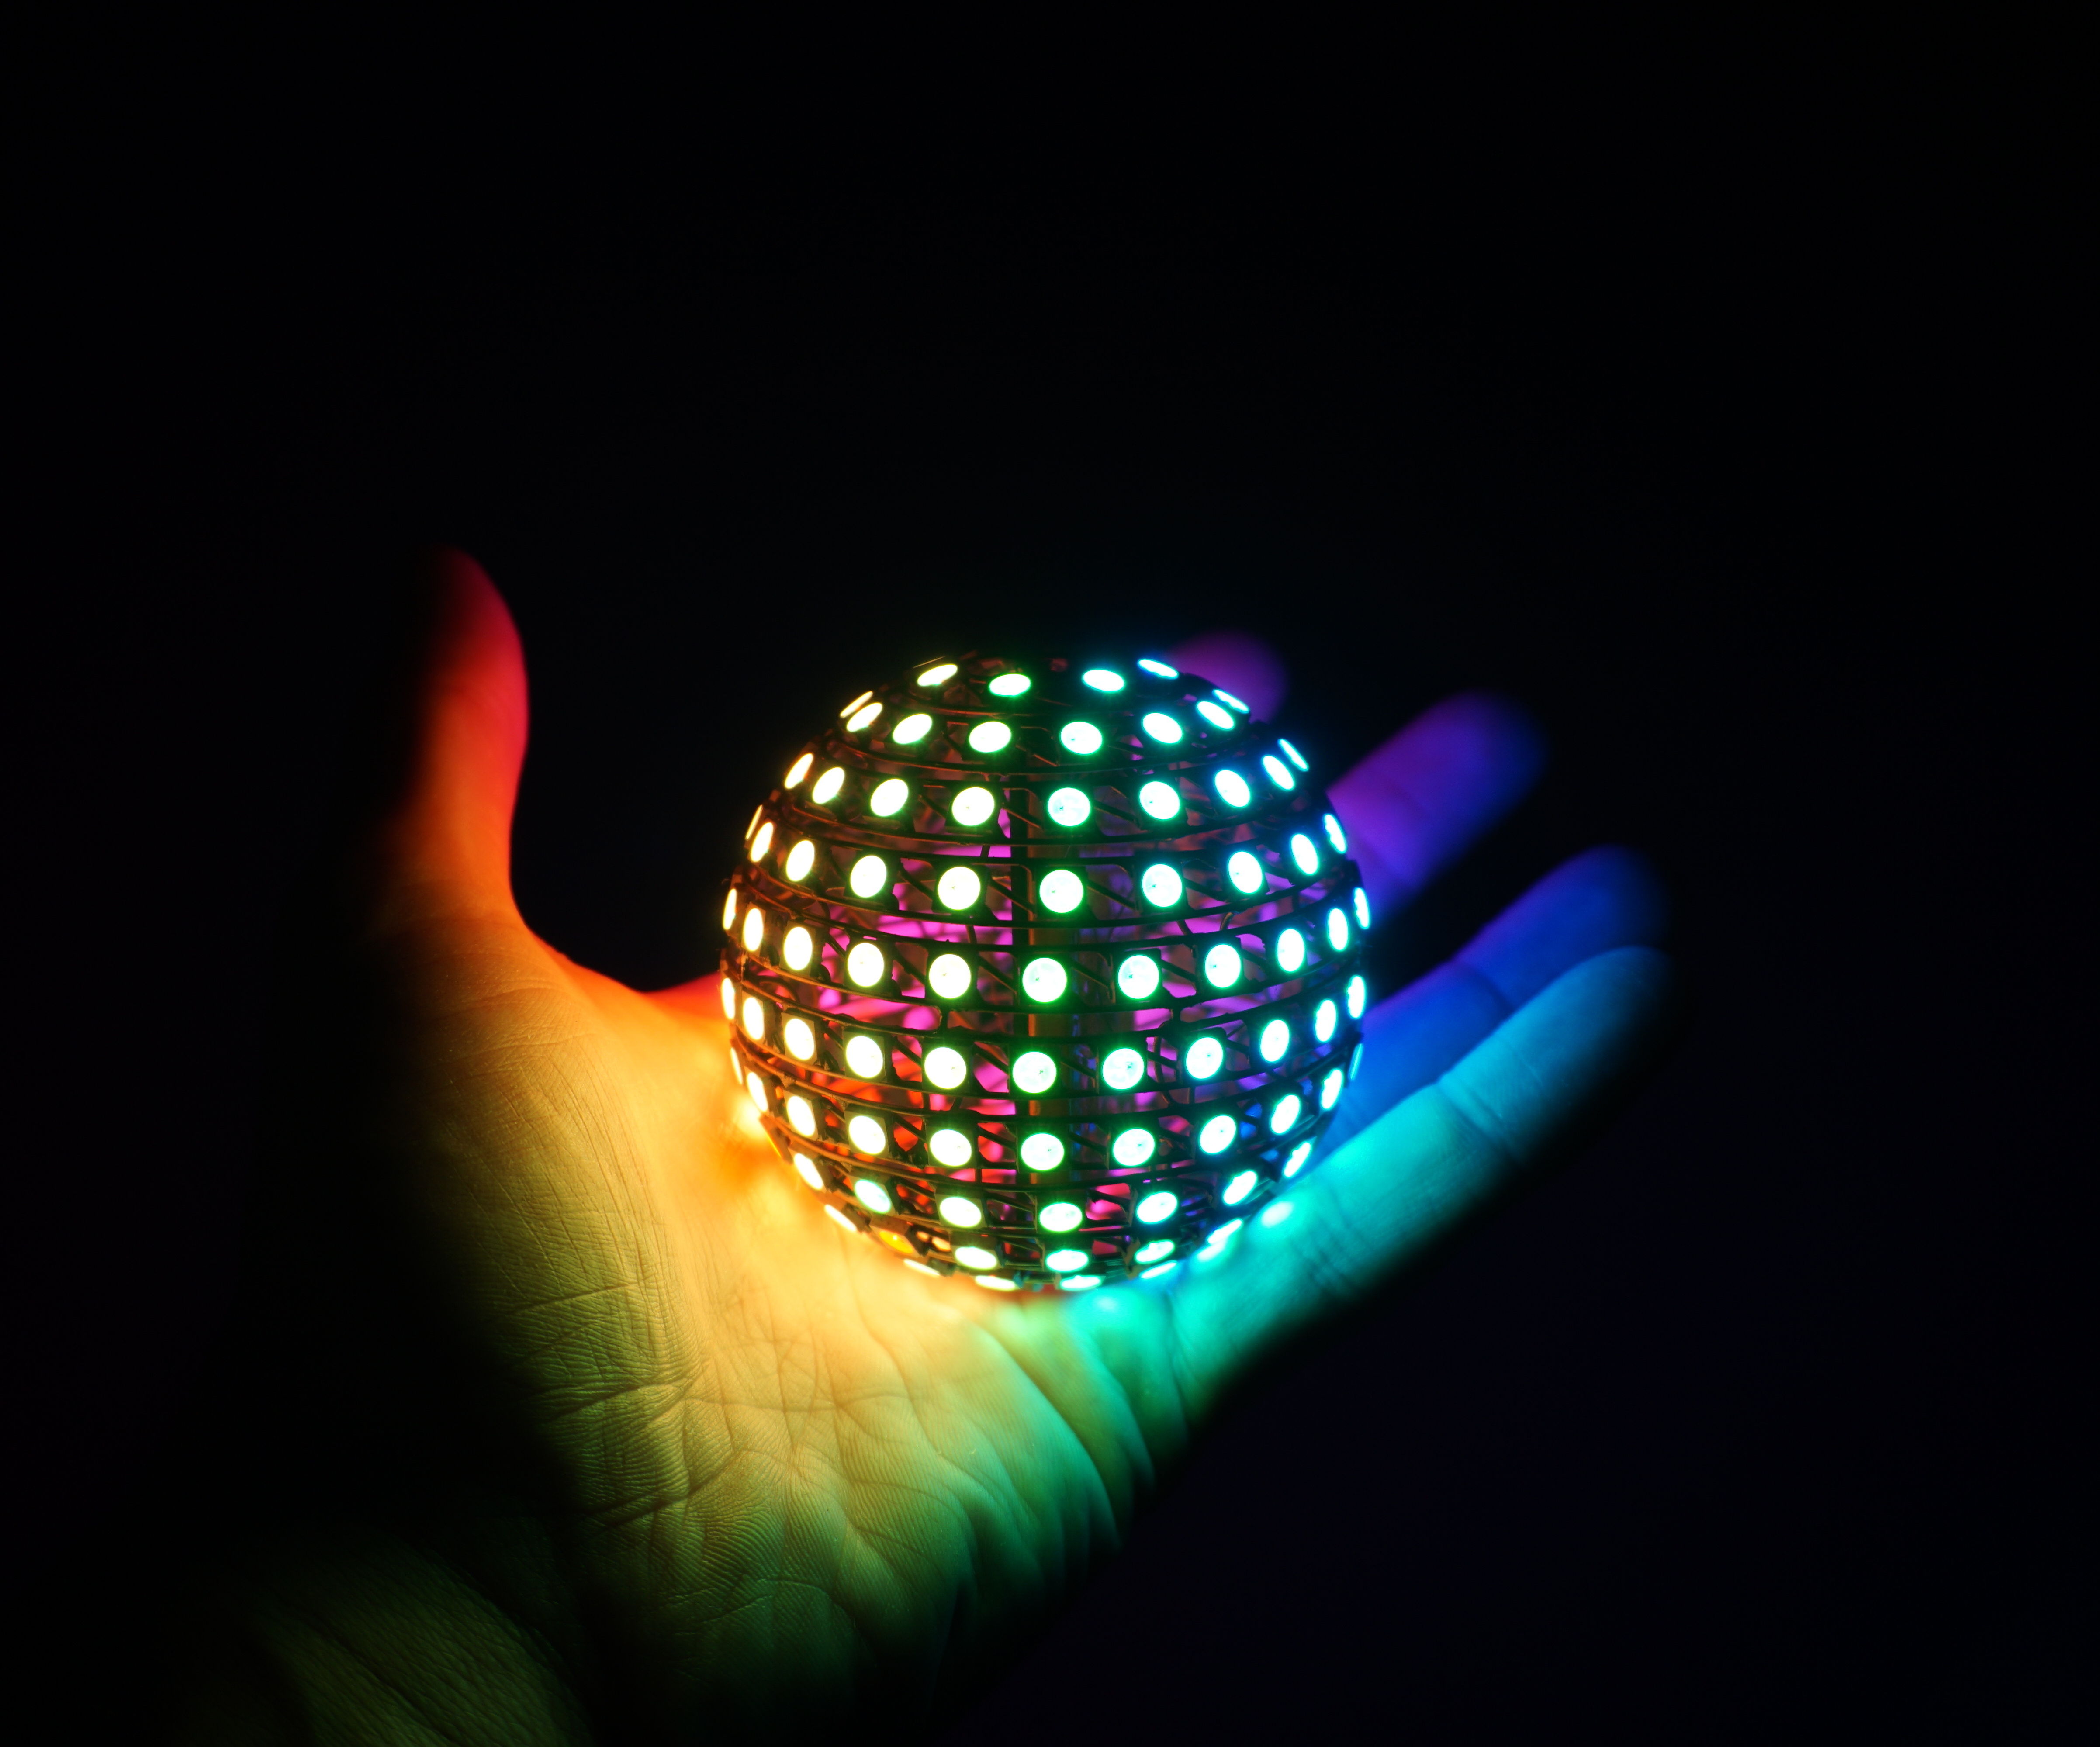 Freeform LED Sphere